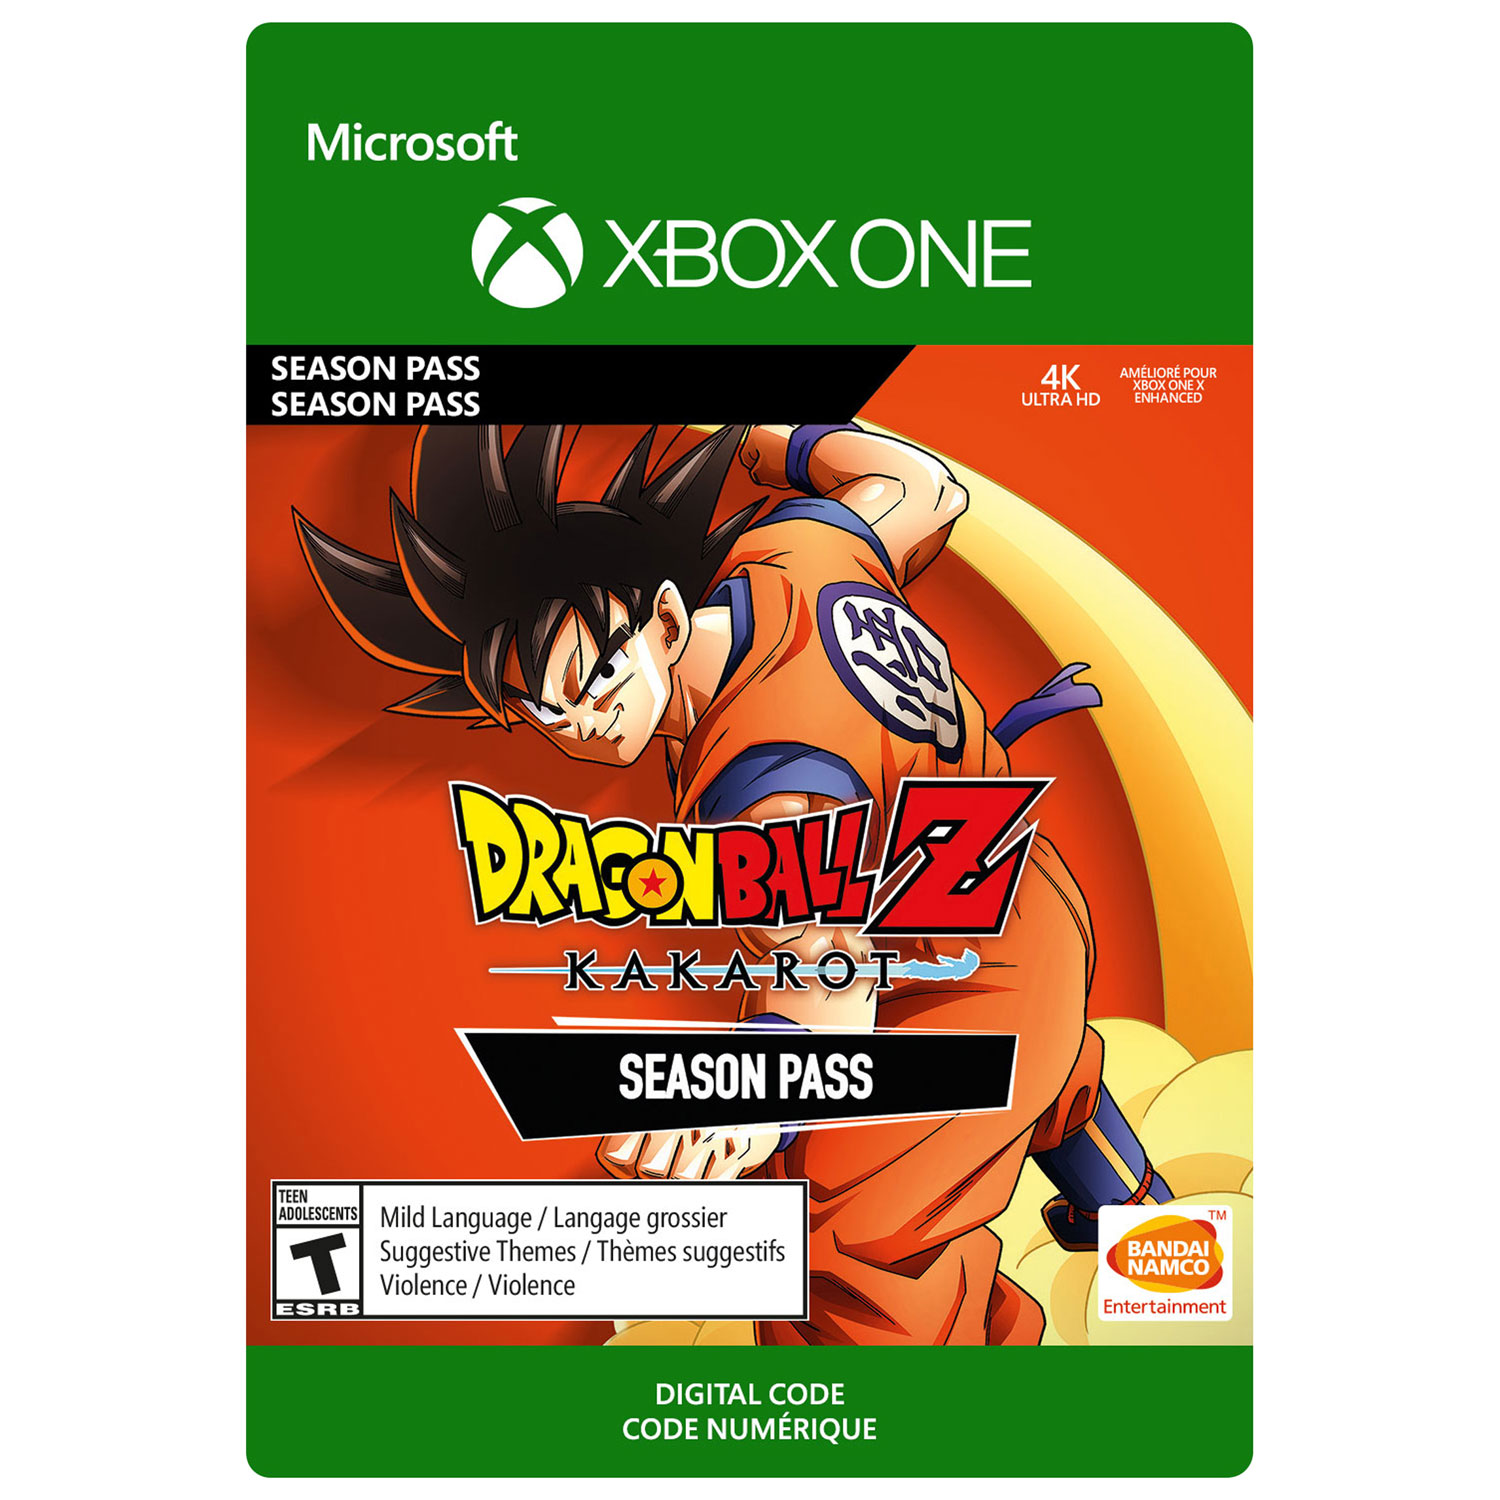 Dragon Ball Z: Kakarot Season Pass (Xbox One) - Digital Download